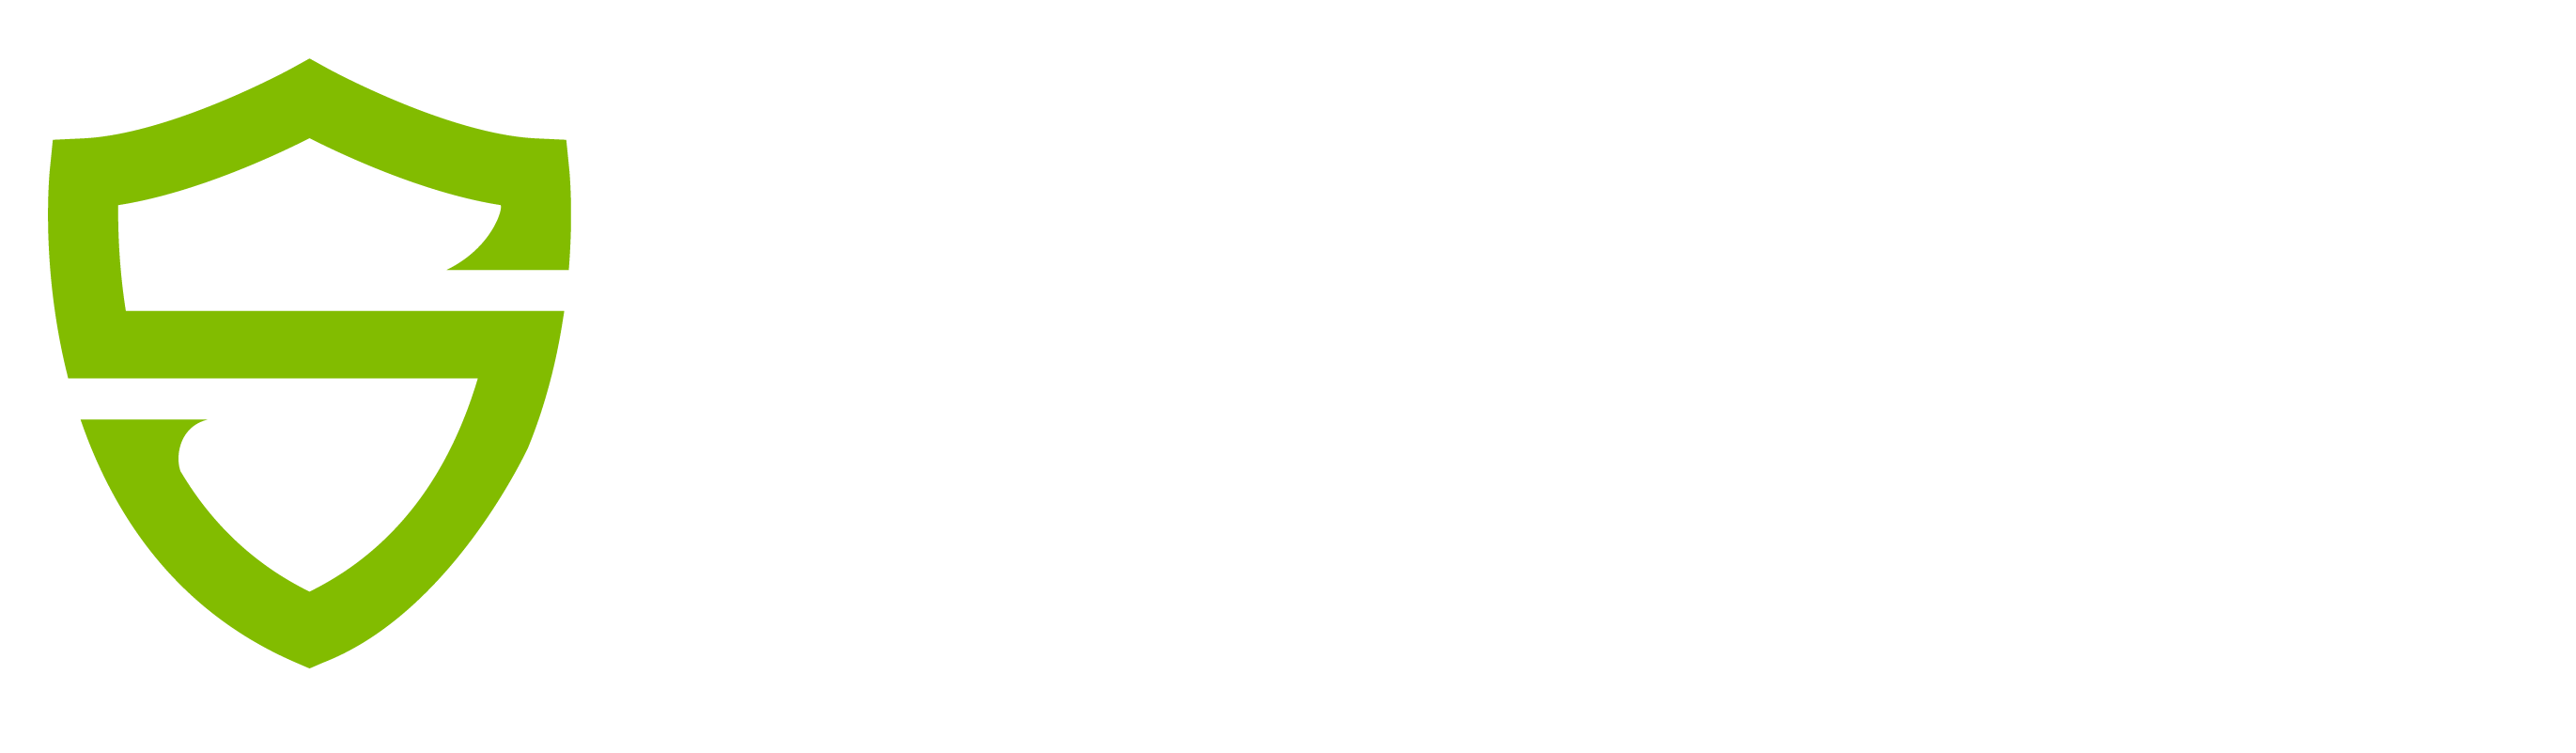 Somerset Painting & Home Improvements Logo